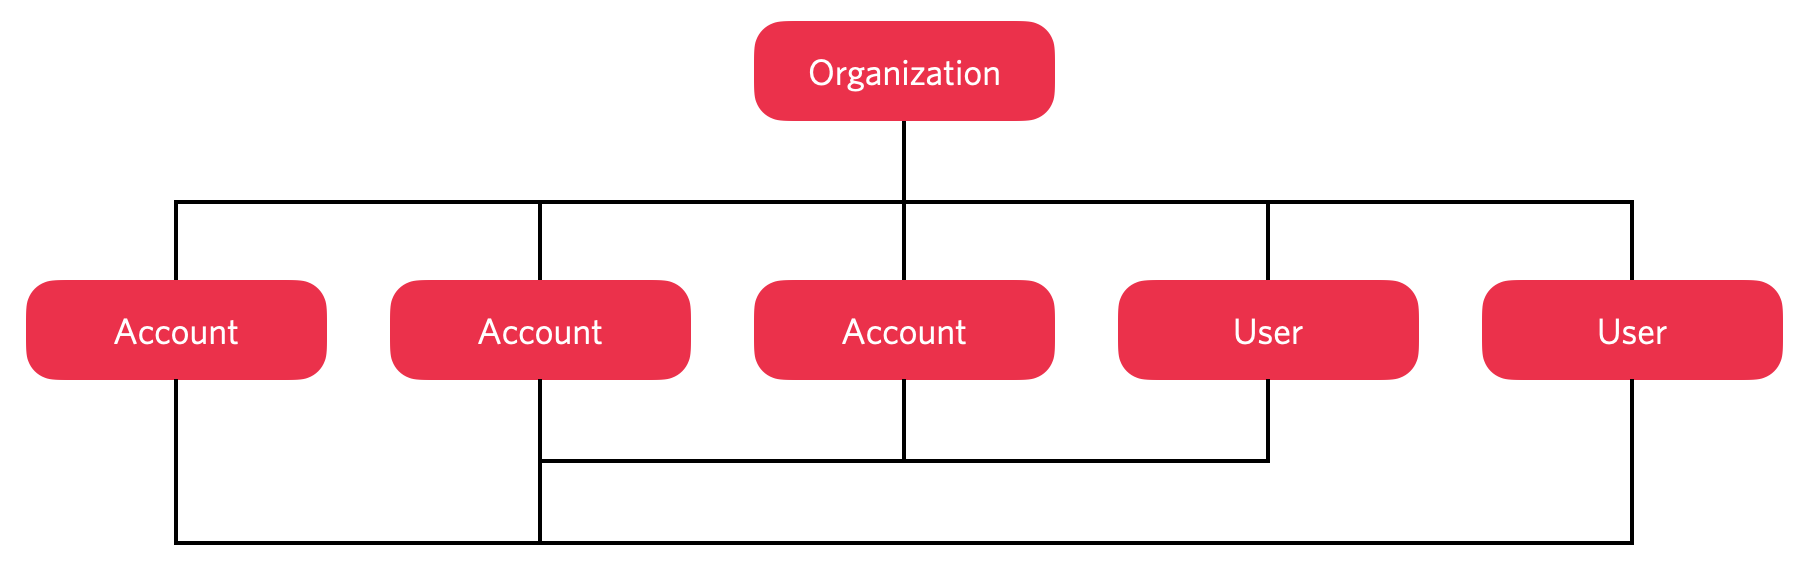 The Twilio Organizations architecture.